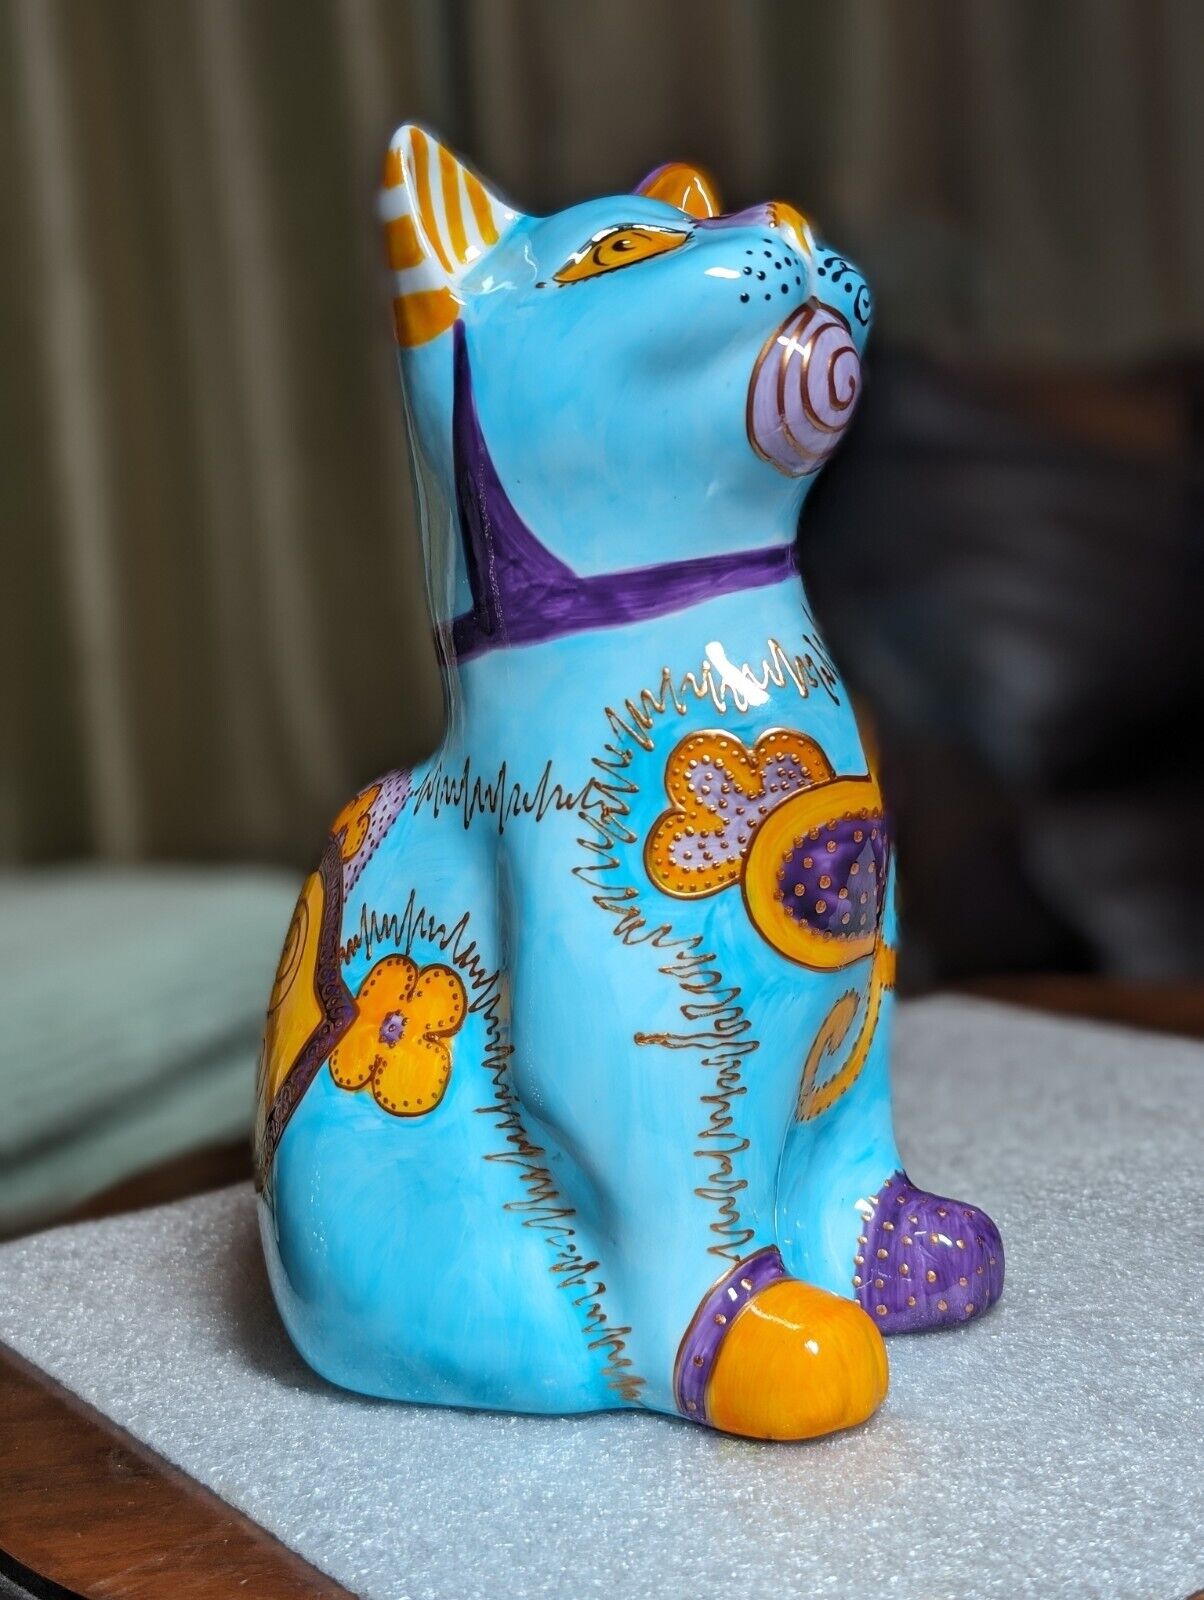 Kitty Cat Figurine From Limoges France Artist Designer Soizick de la Brugiere 